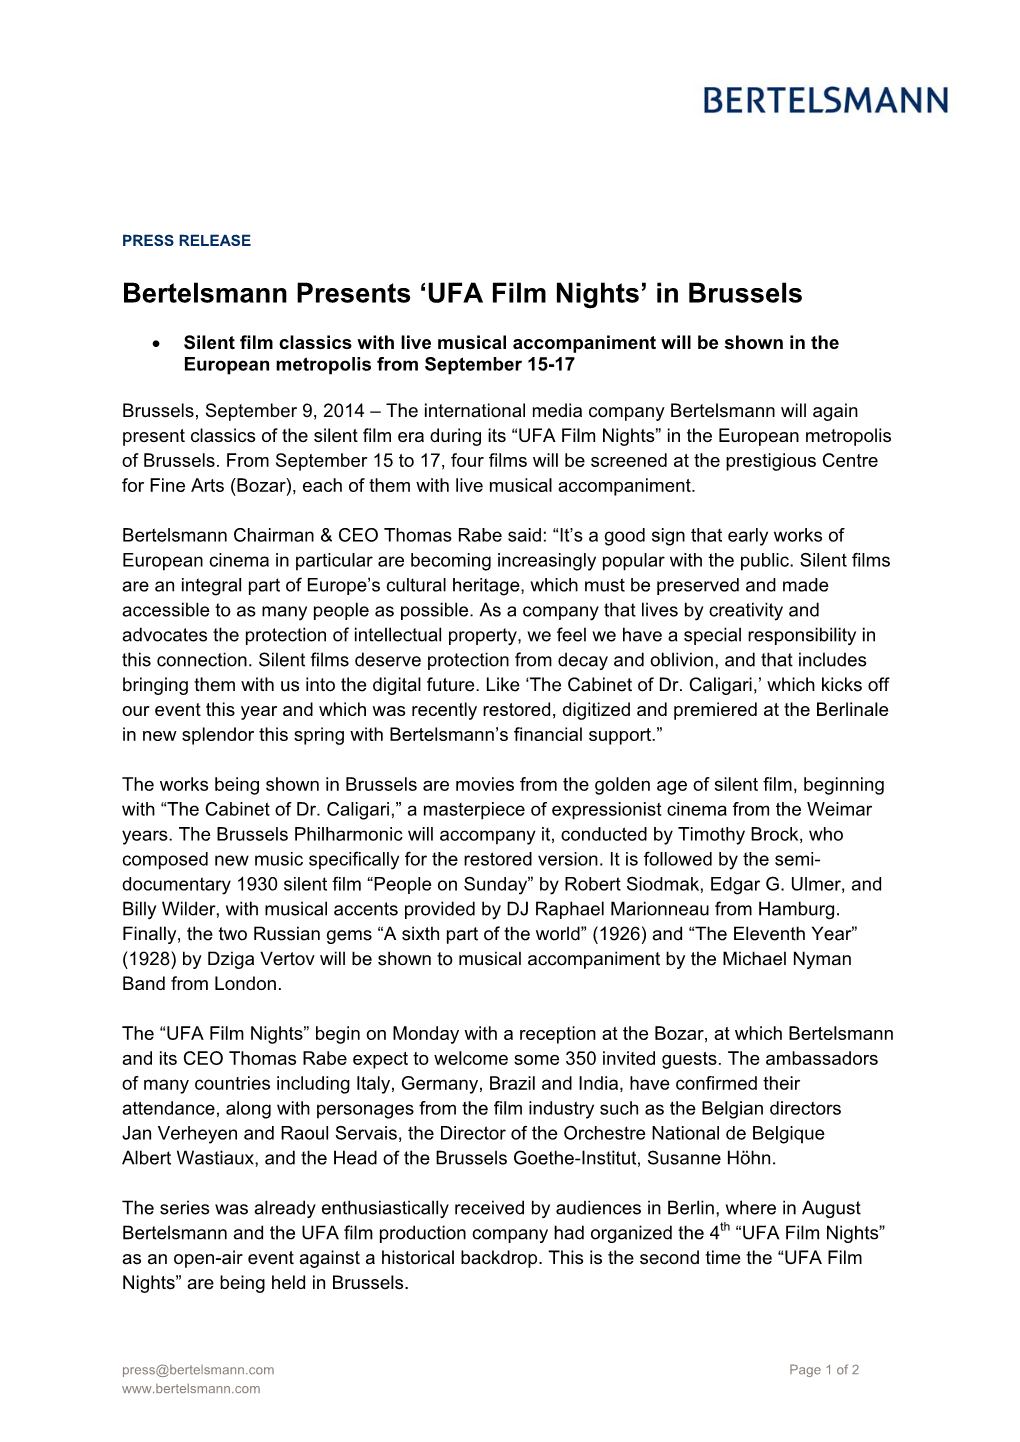 Bertelsmann Presents 'UFA Film Nights' in Brussels